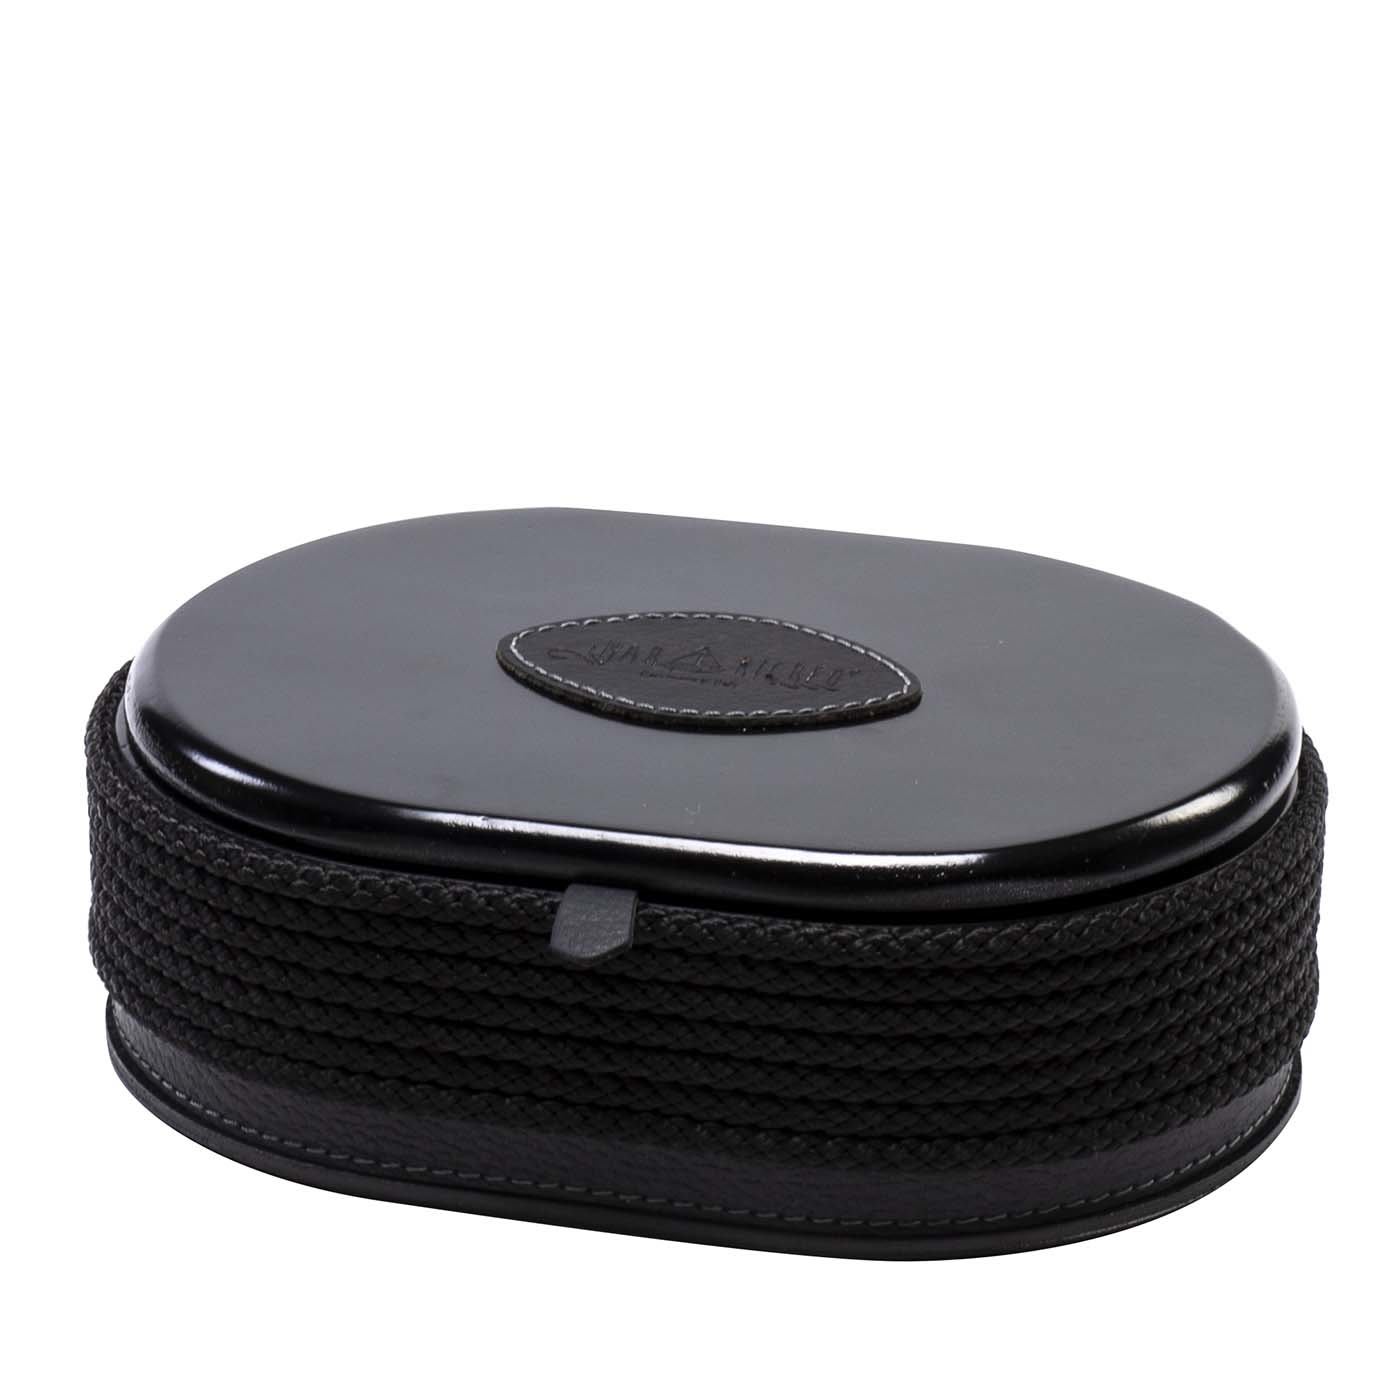 Black Oval Jewelry Box - Marricreo